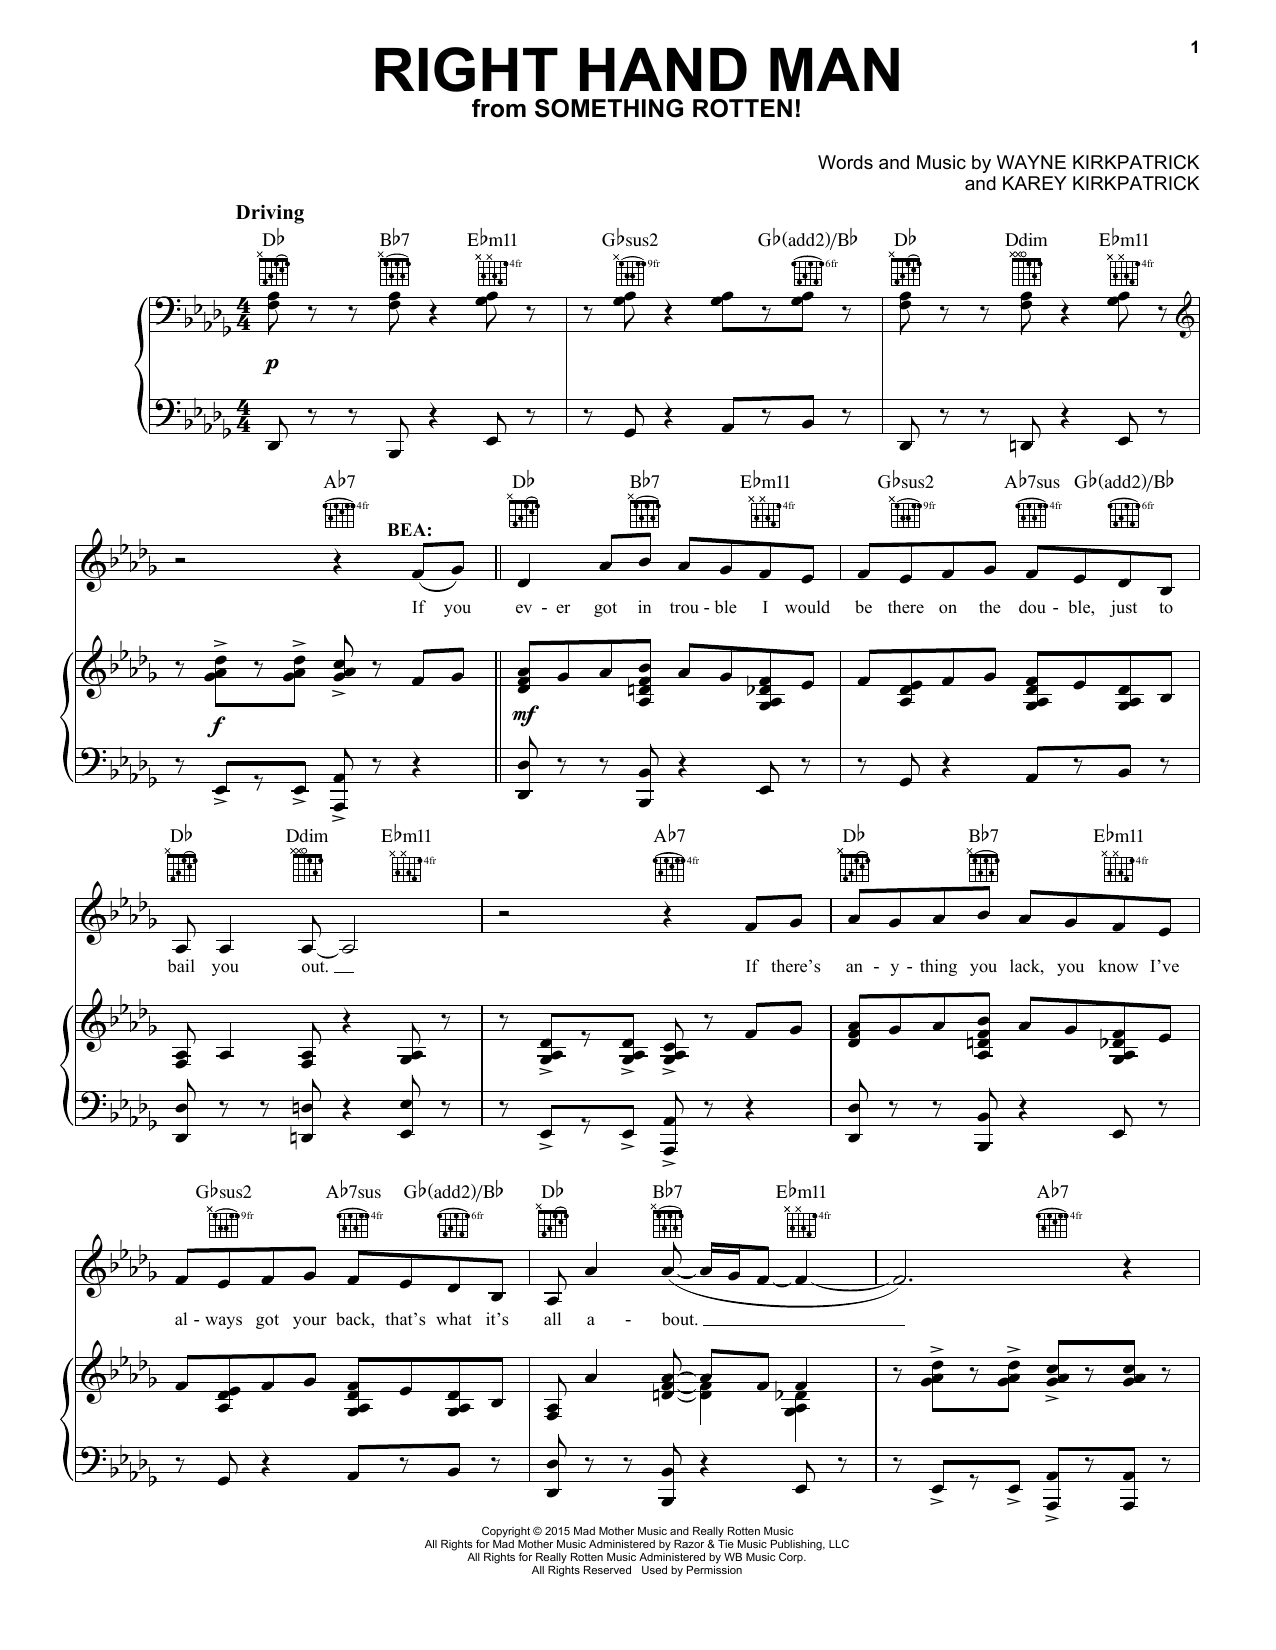 Wayne Kirkpatrick Right Hand Man Sheet Music Notes & Chords for Piano, Vocal & Guitar (Right-Hand Melody) - Download or Print PDF